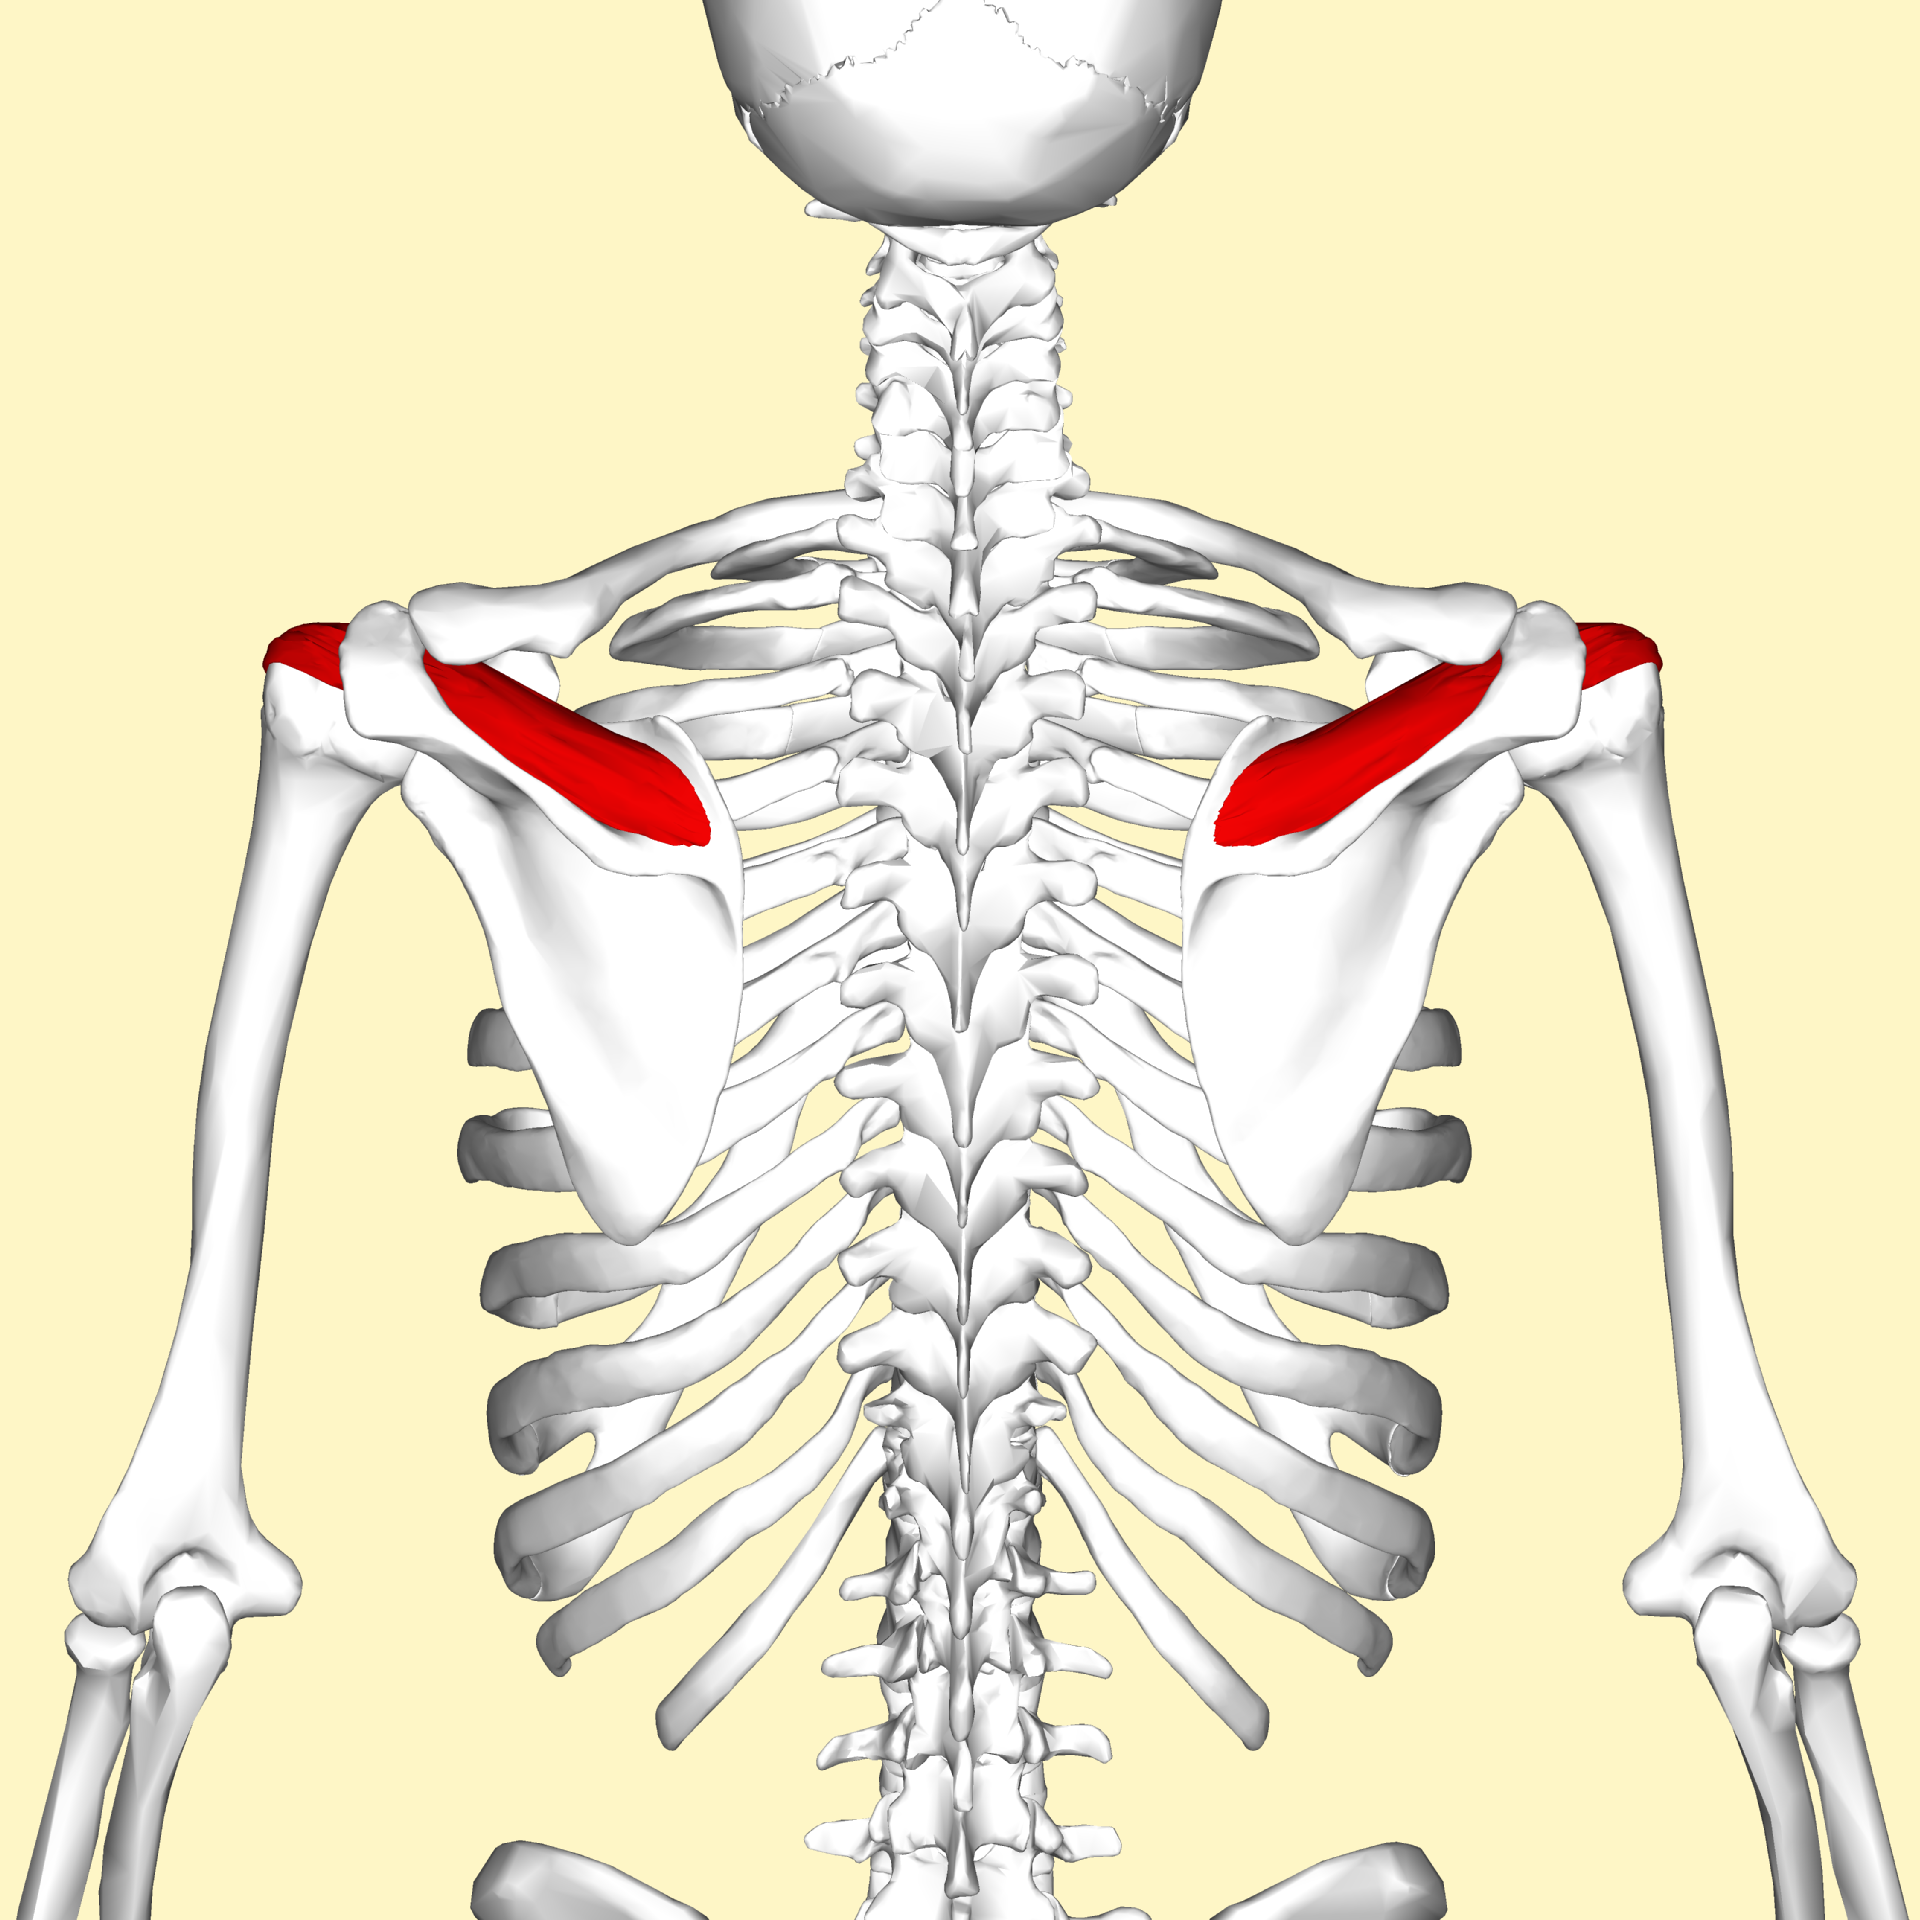 Functional Anatomy of the Supraspinatuswebinar thumbnail